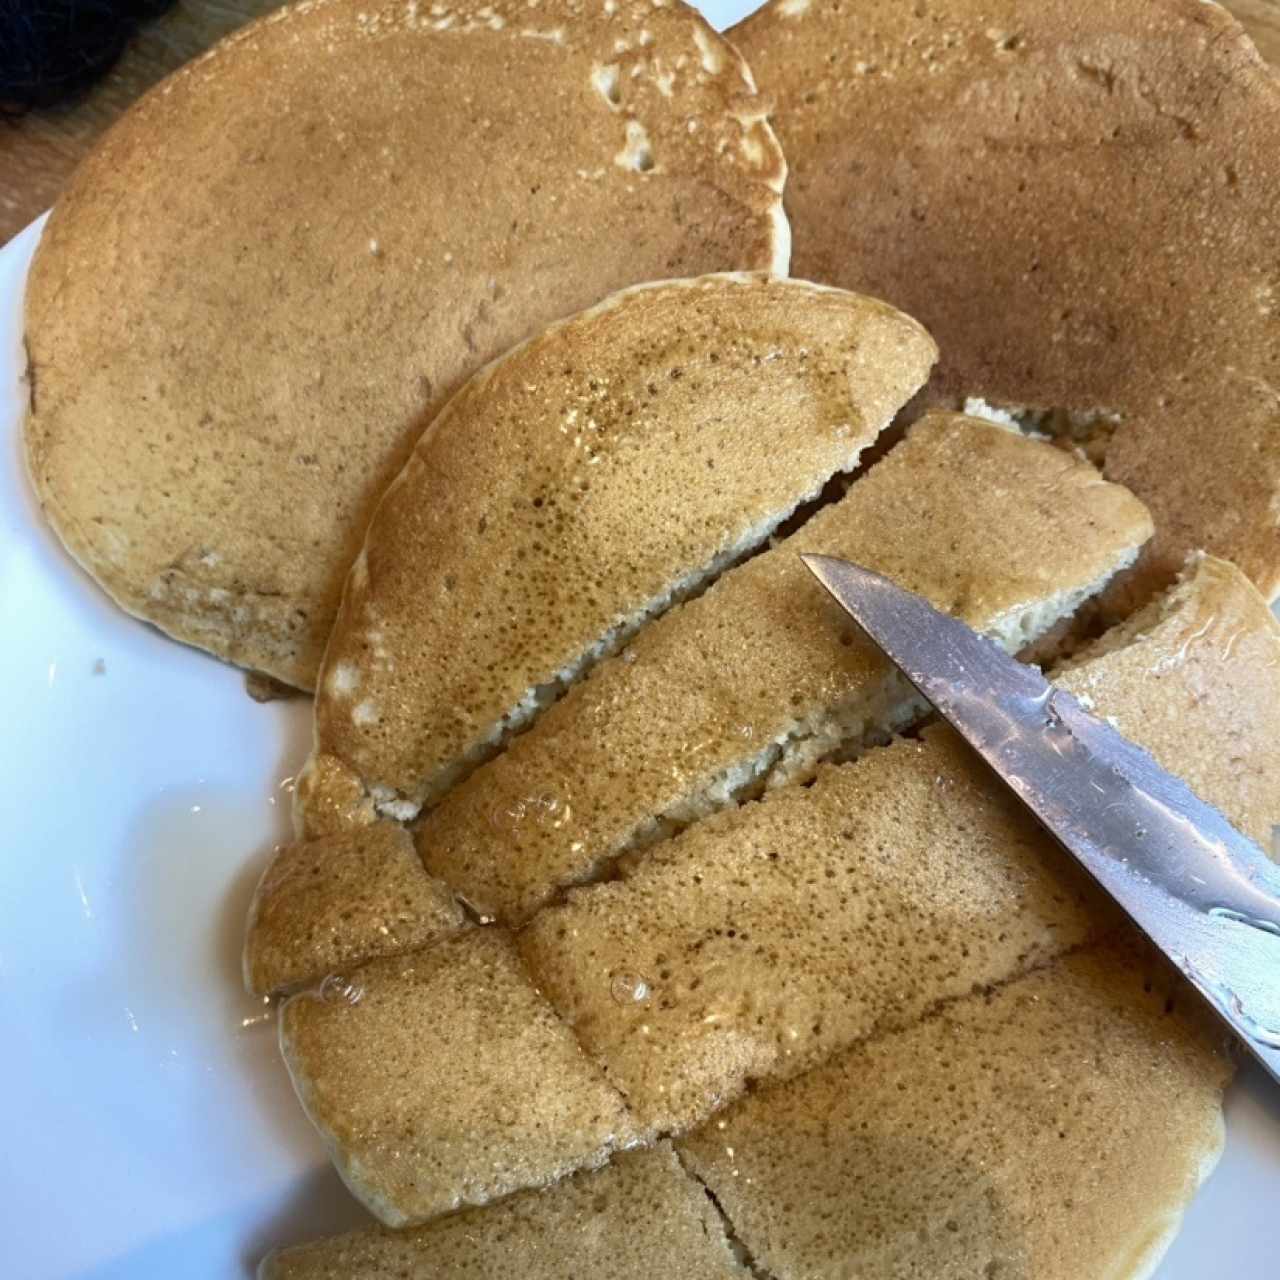 Pancake simple